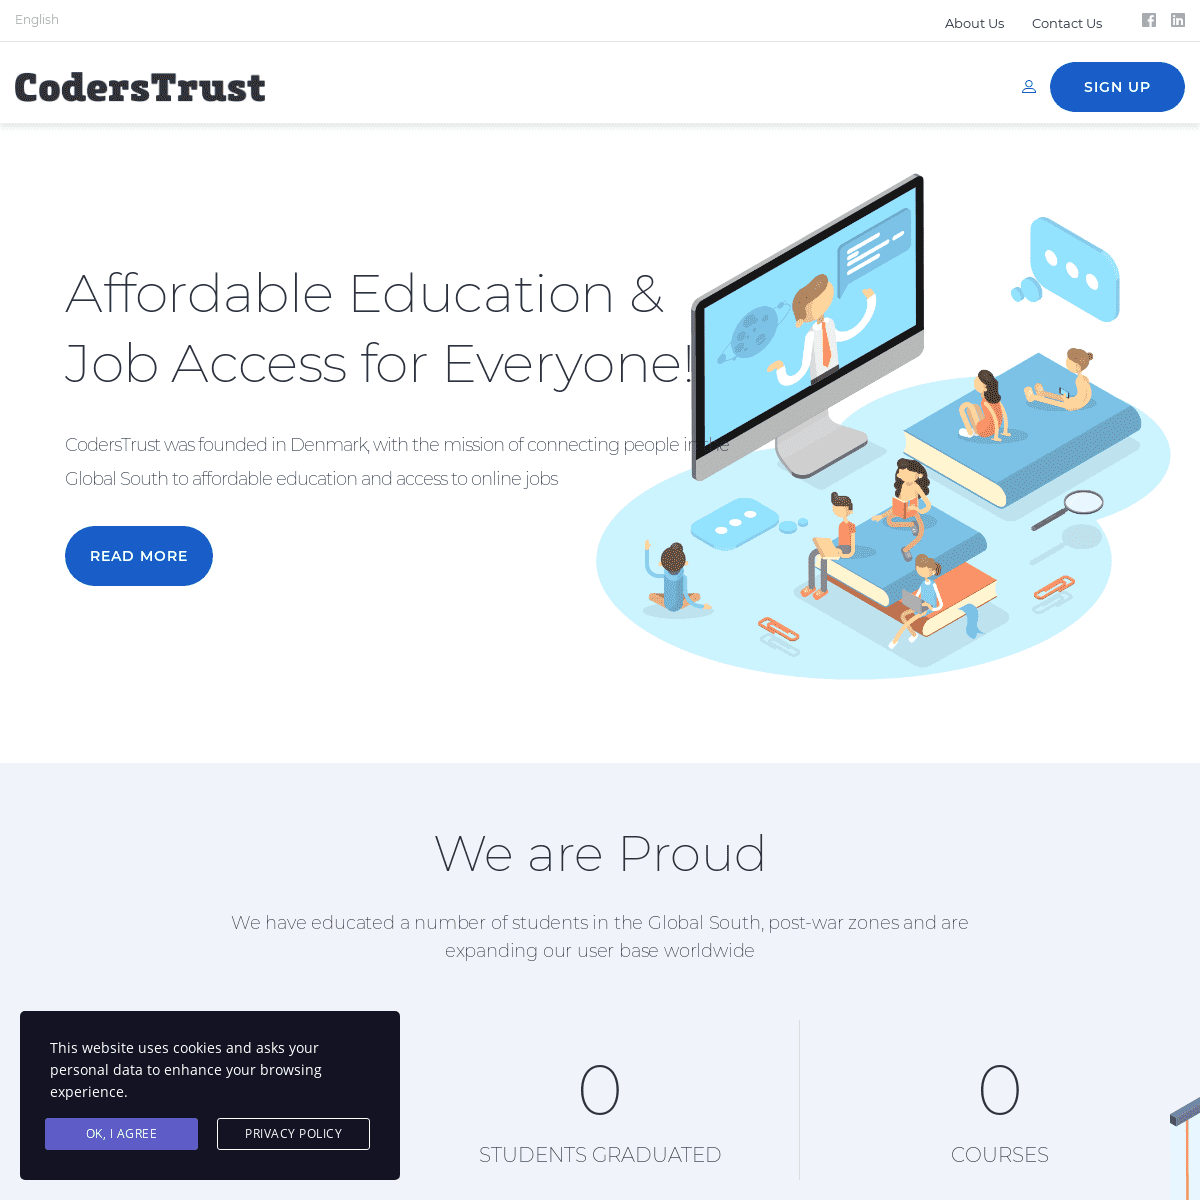 A complete backup of coderstrust.com